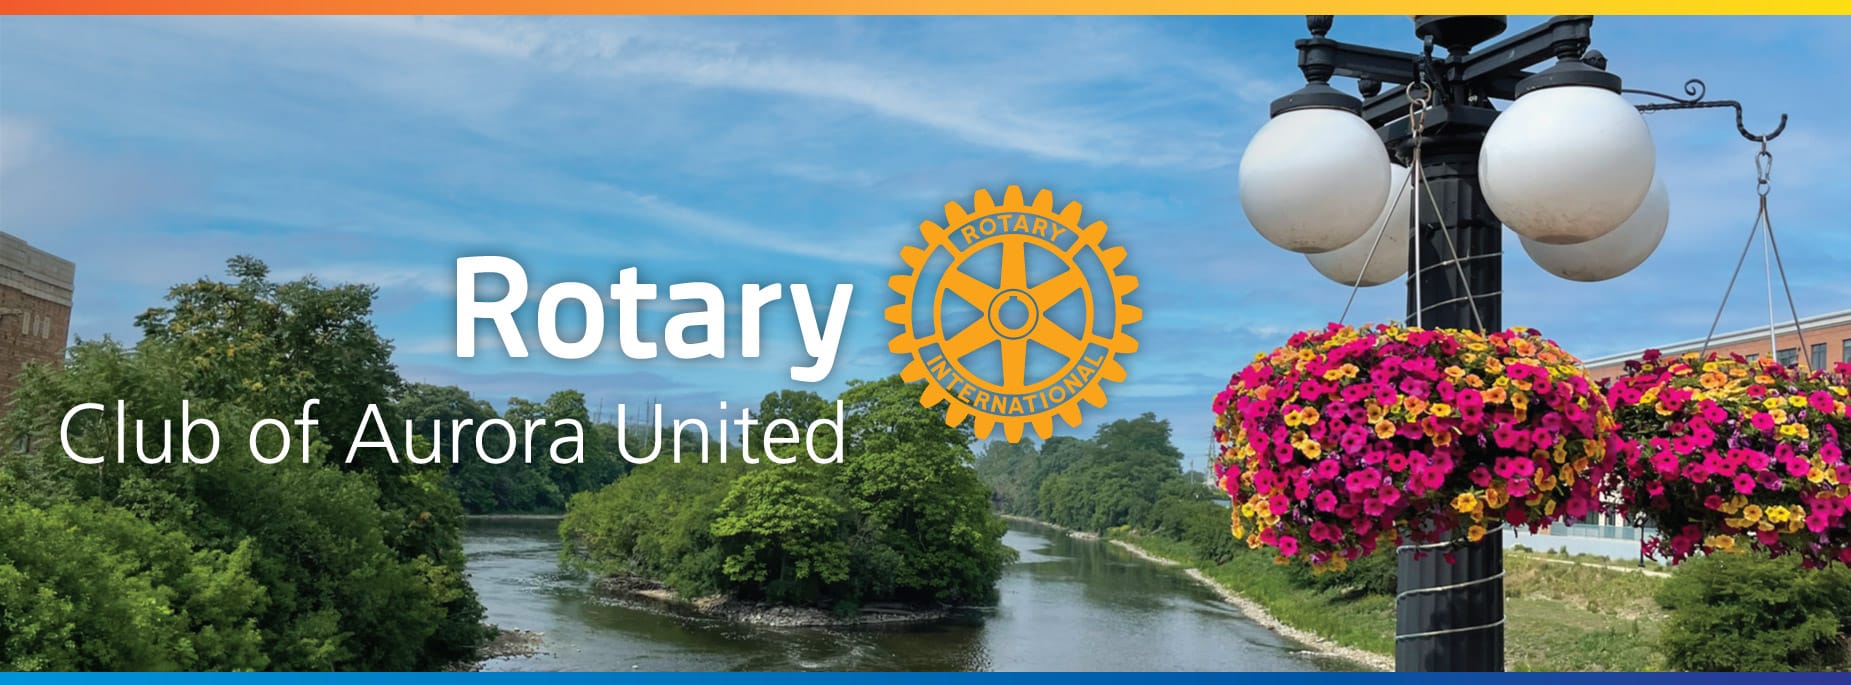 Rotary Club of Aurora